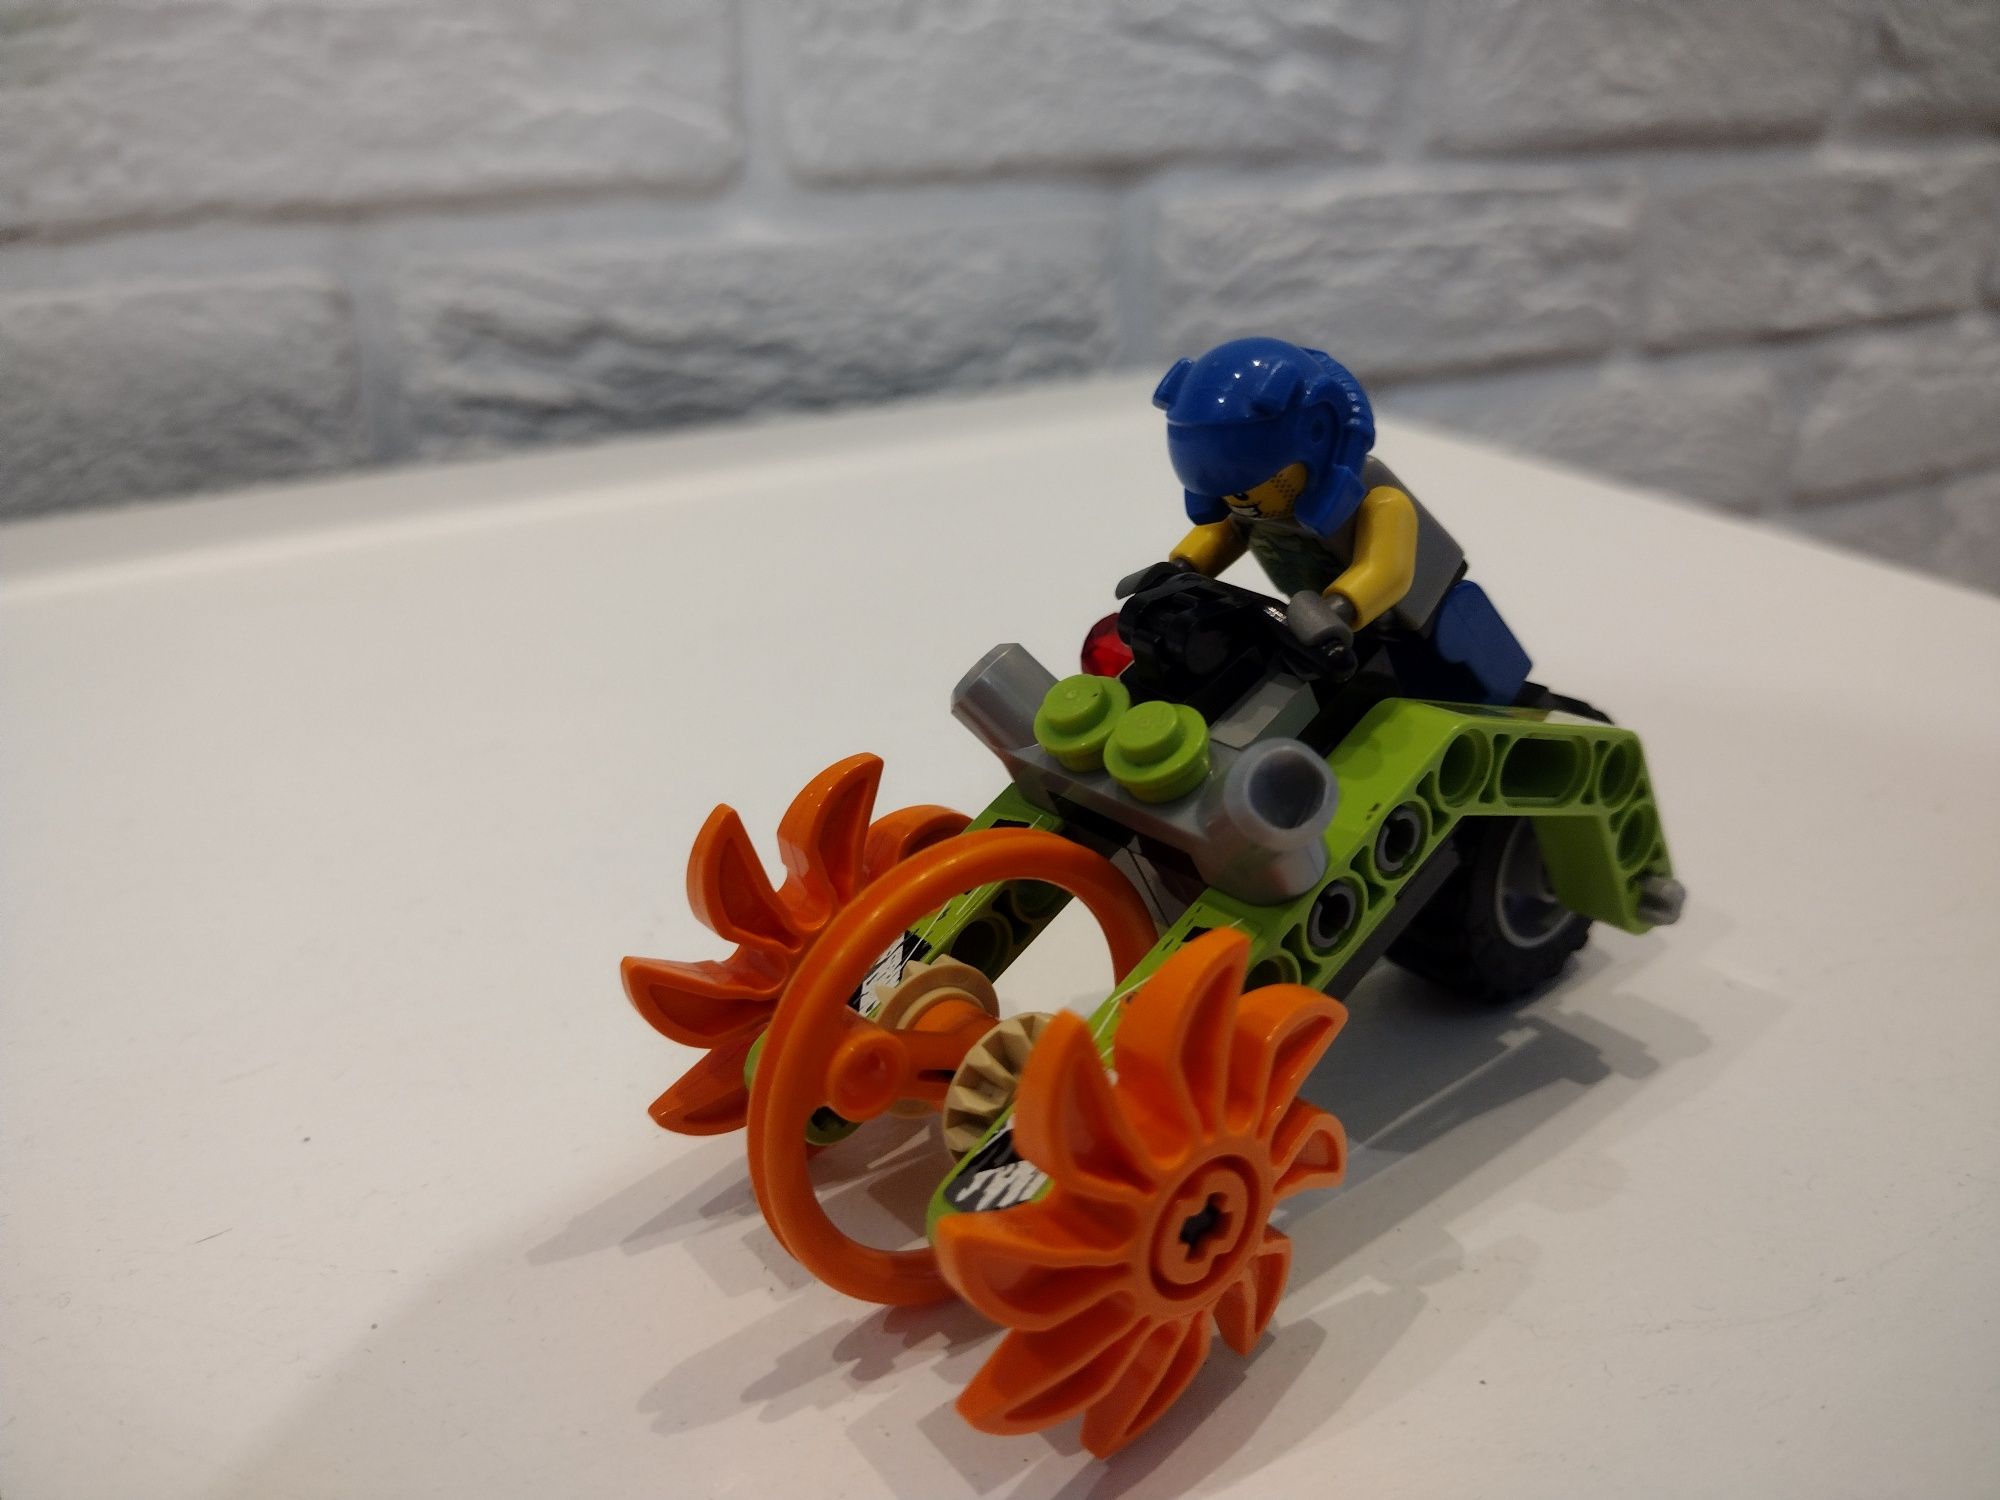 LEGO 8956 Power Miners - Stone Chopper